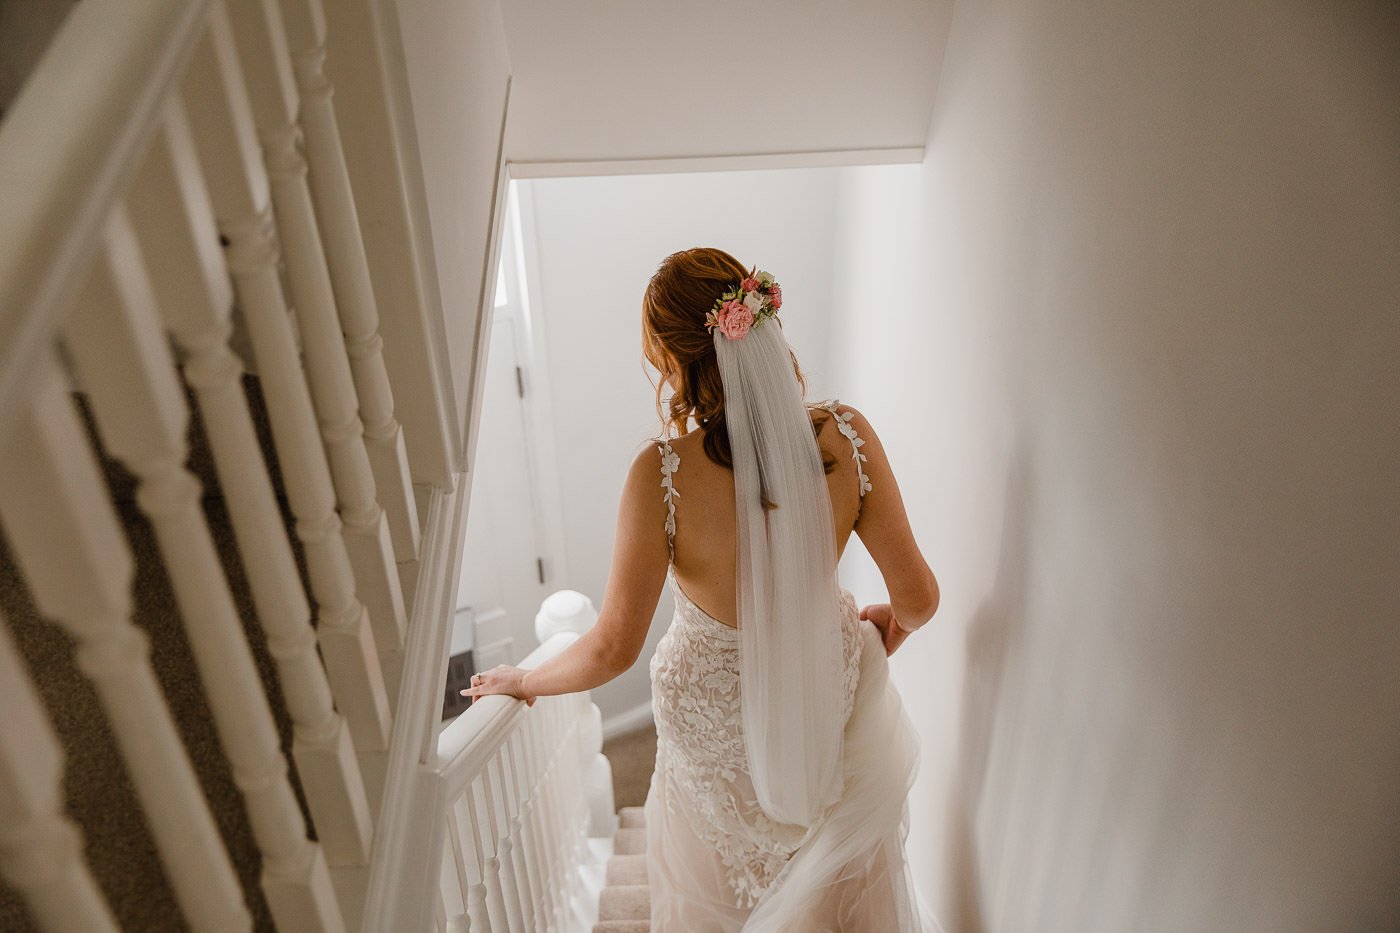 5-bride-walking-down-stairs-wedding-morning.jpg